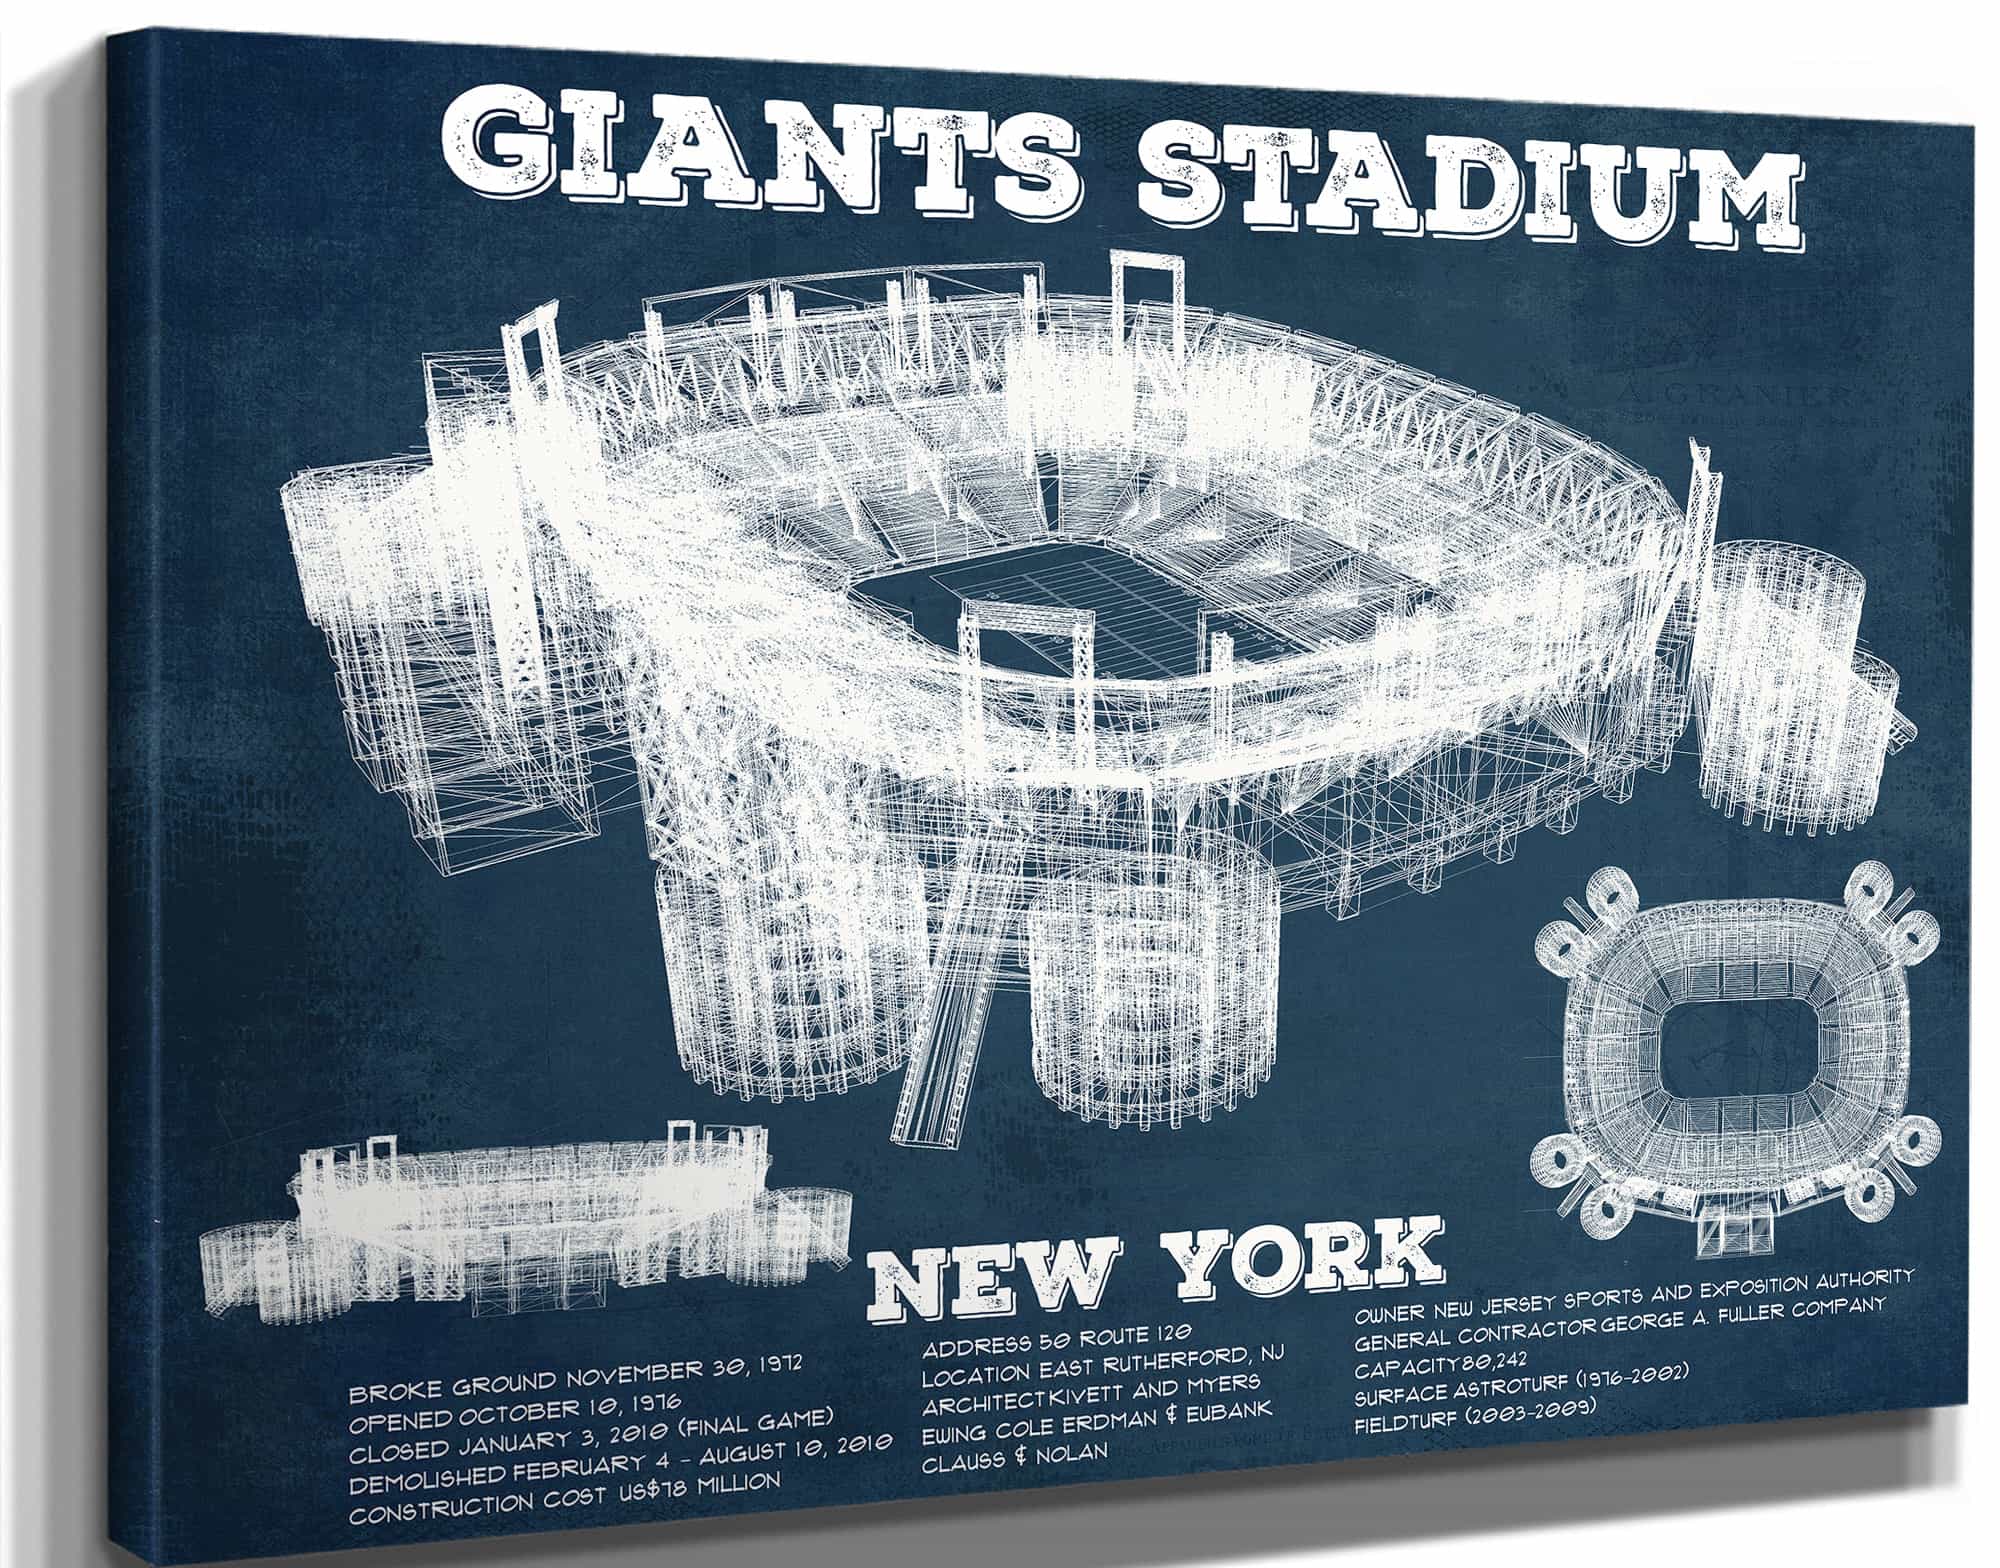 Giants Stadium - The Meadowlands New York Vintage Print